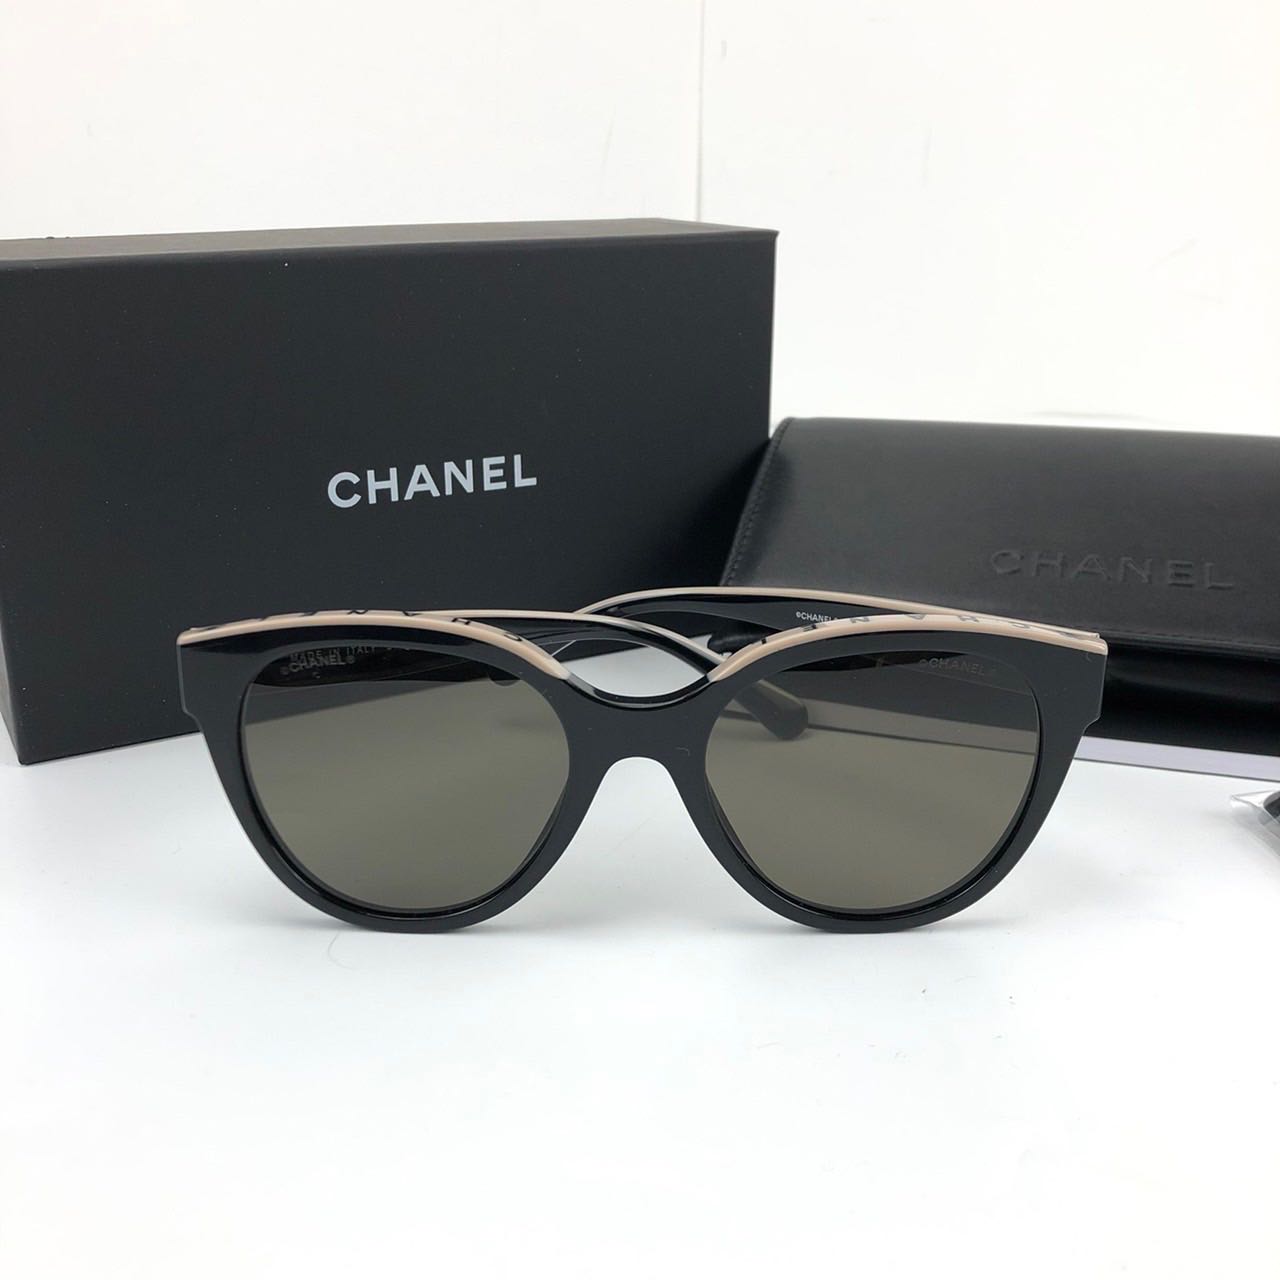 Chanel Sunglass Two tone (Used like new)